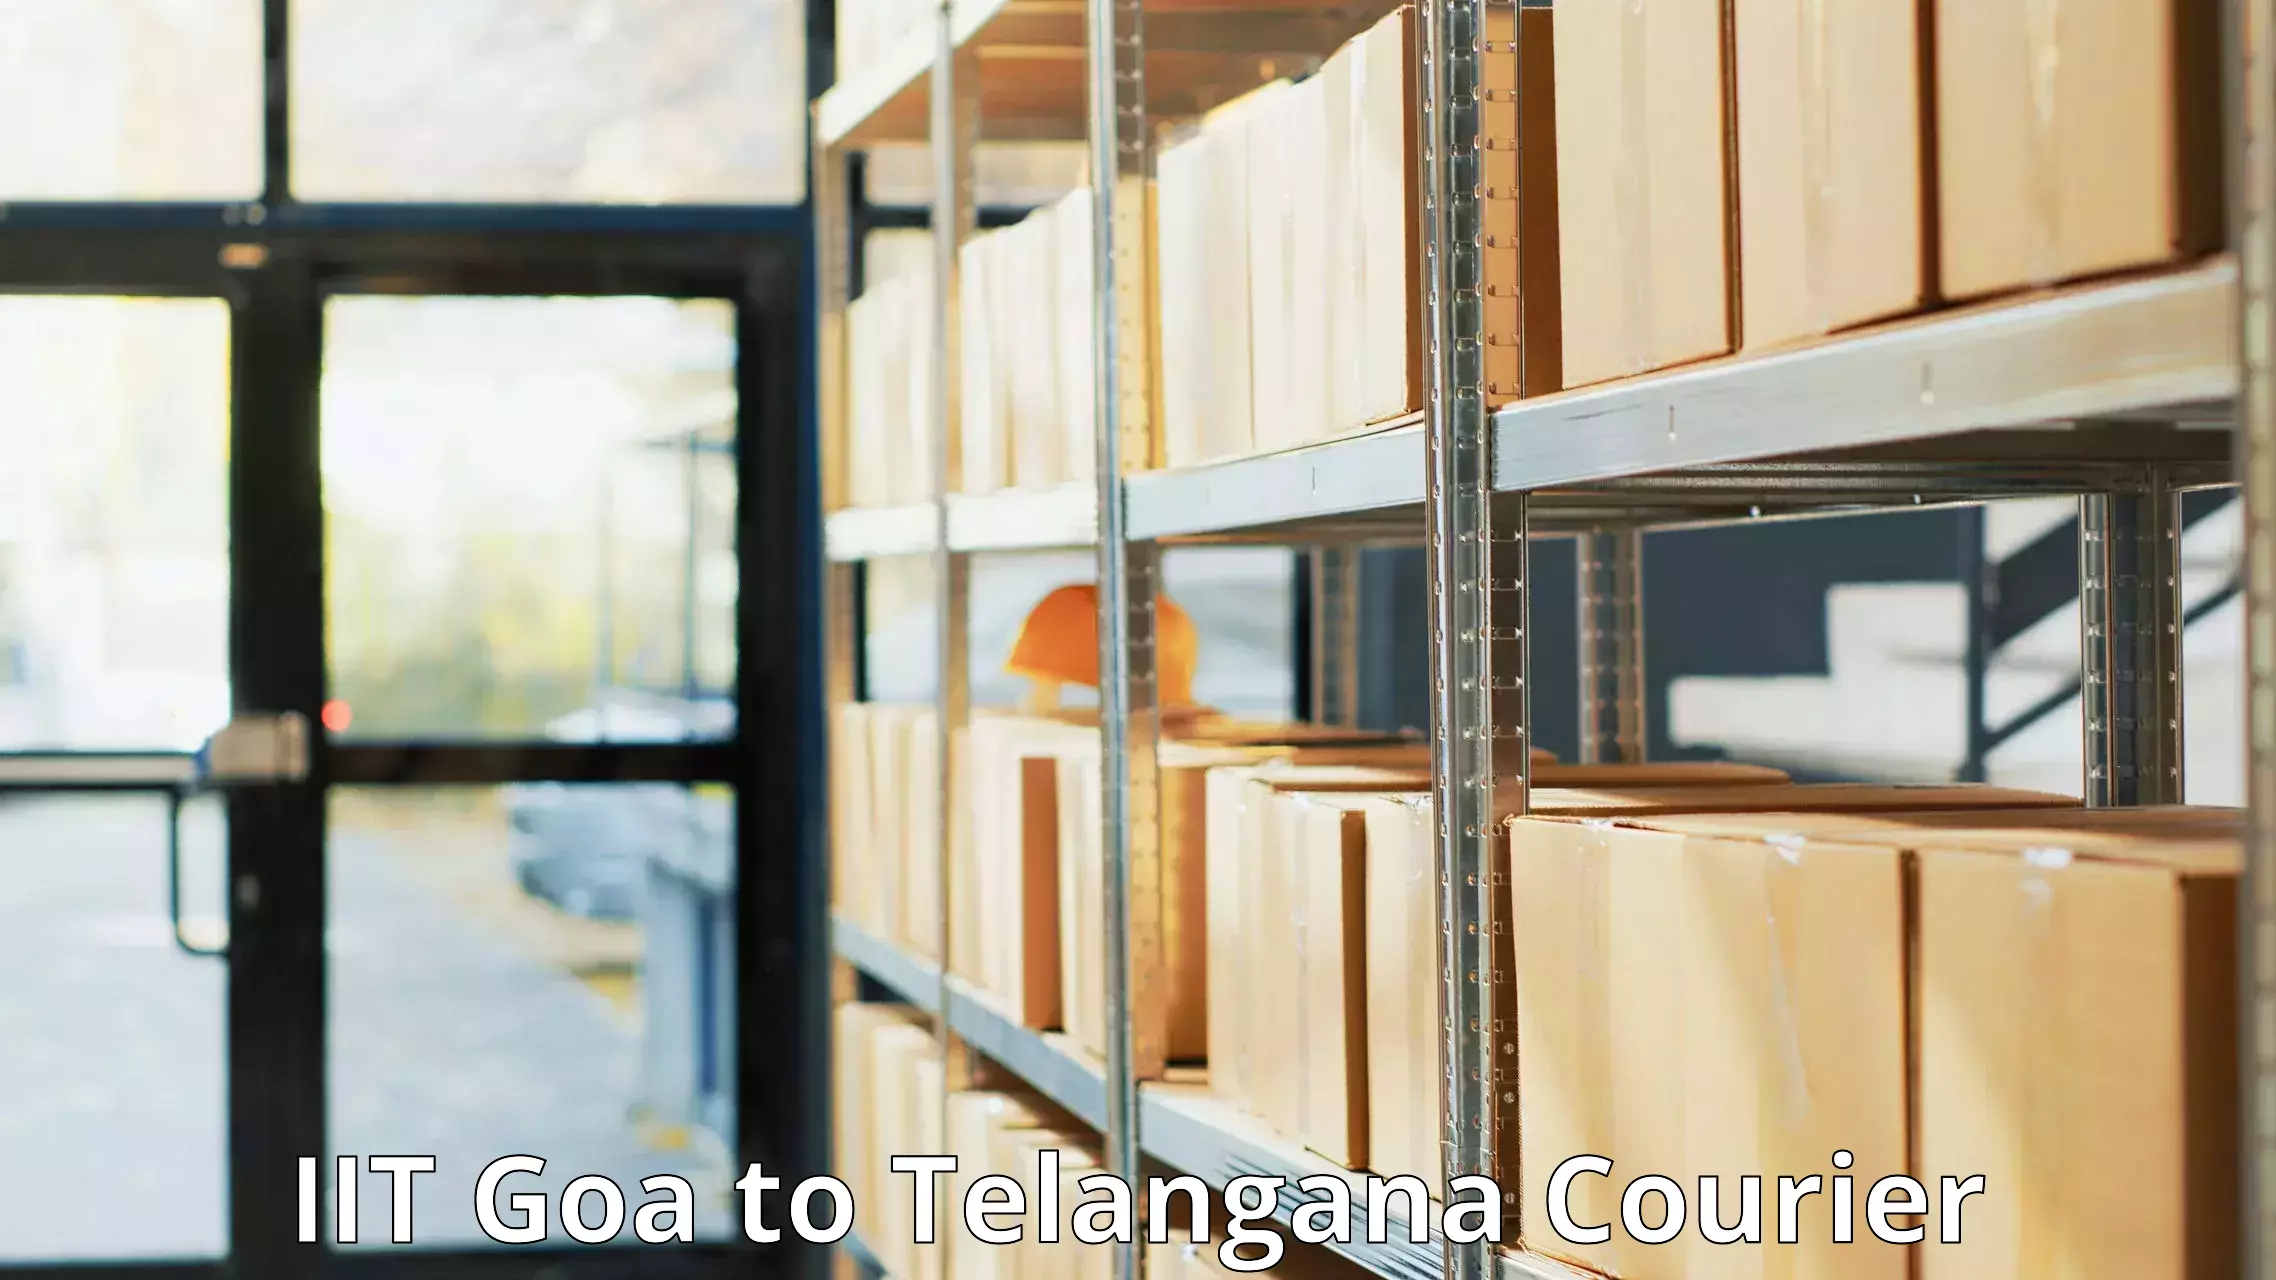 Express courier facilities IIT Goa to Bhuvanagiri